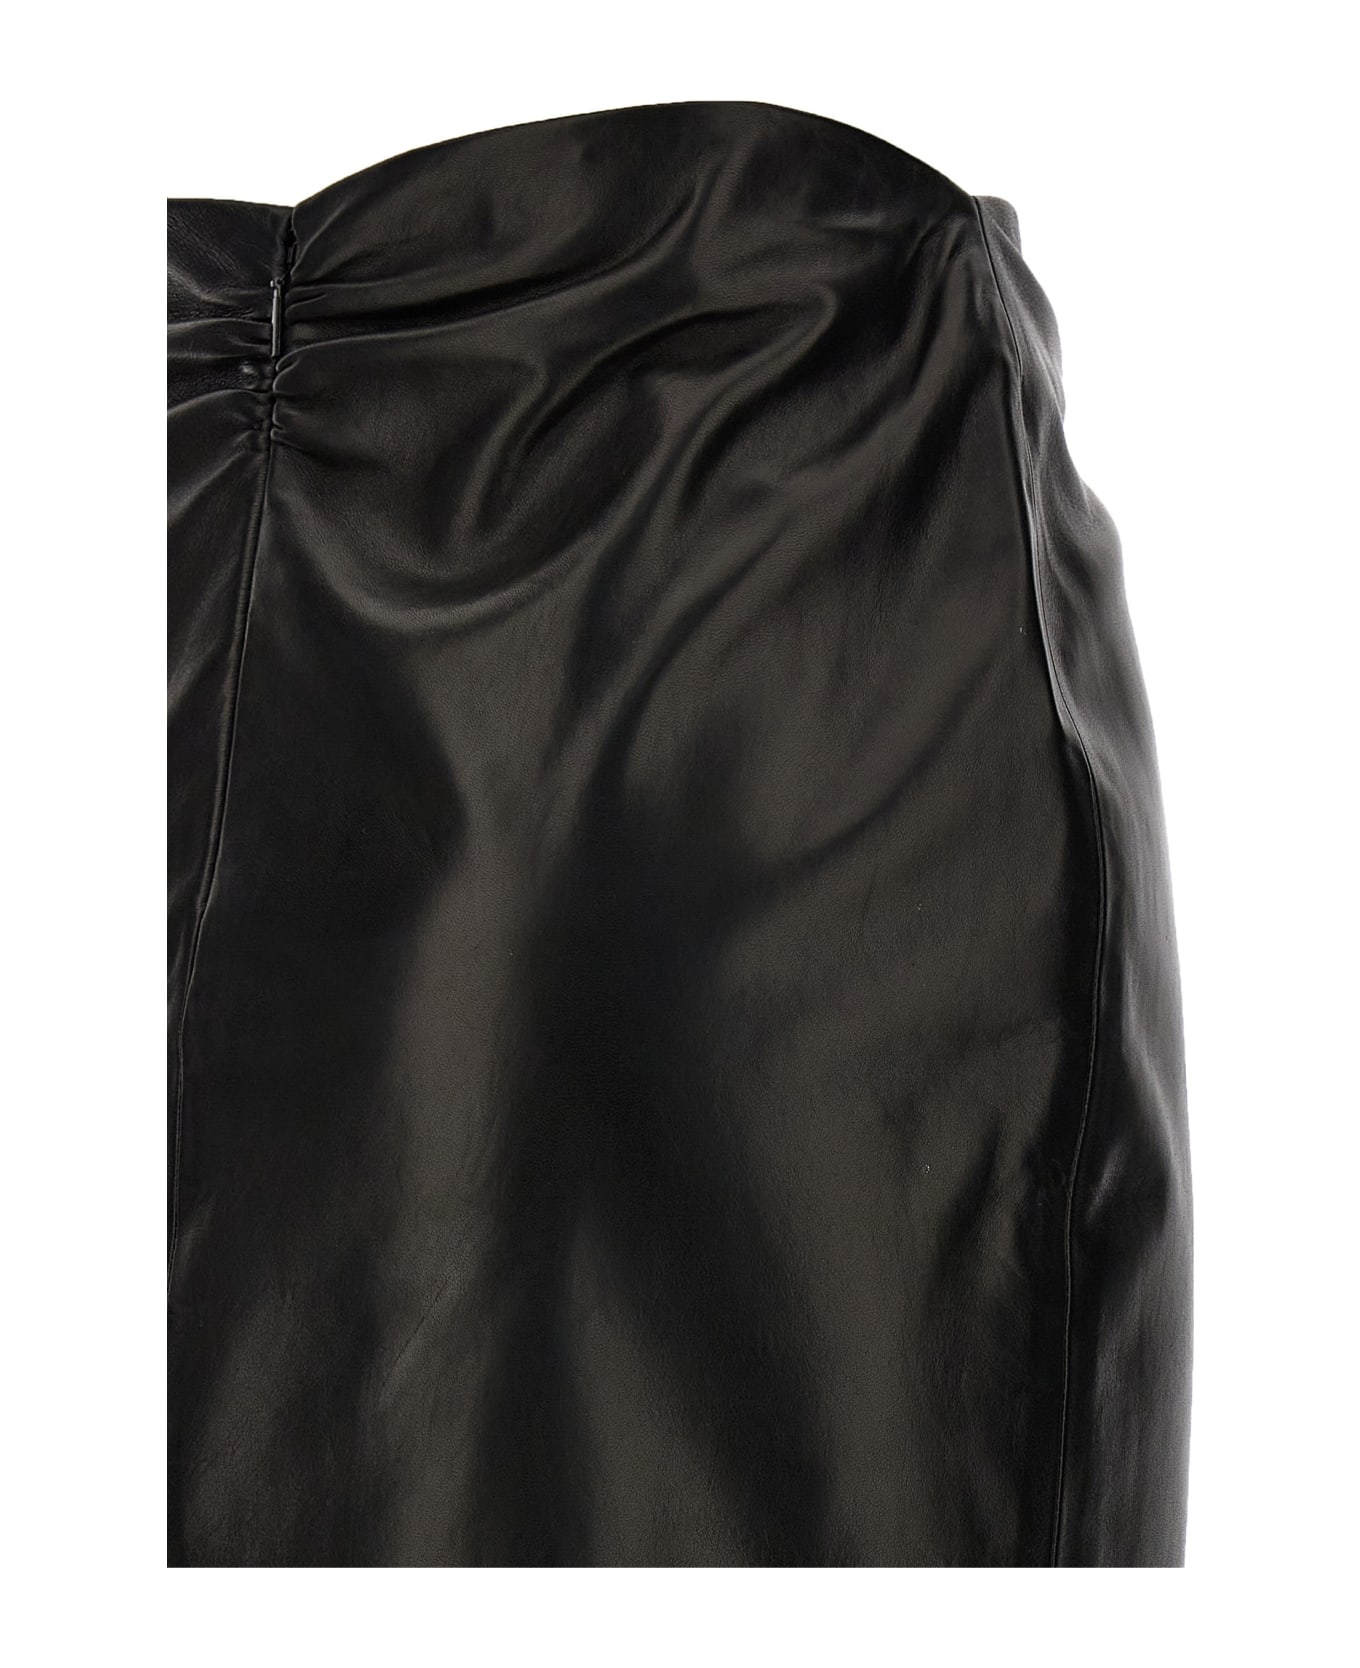 Saint Laurent Ruched Detail Leather Skirt - Black  